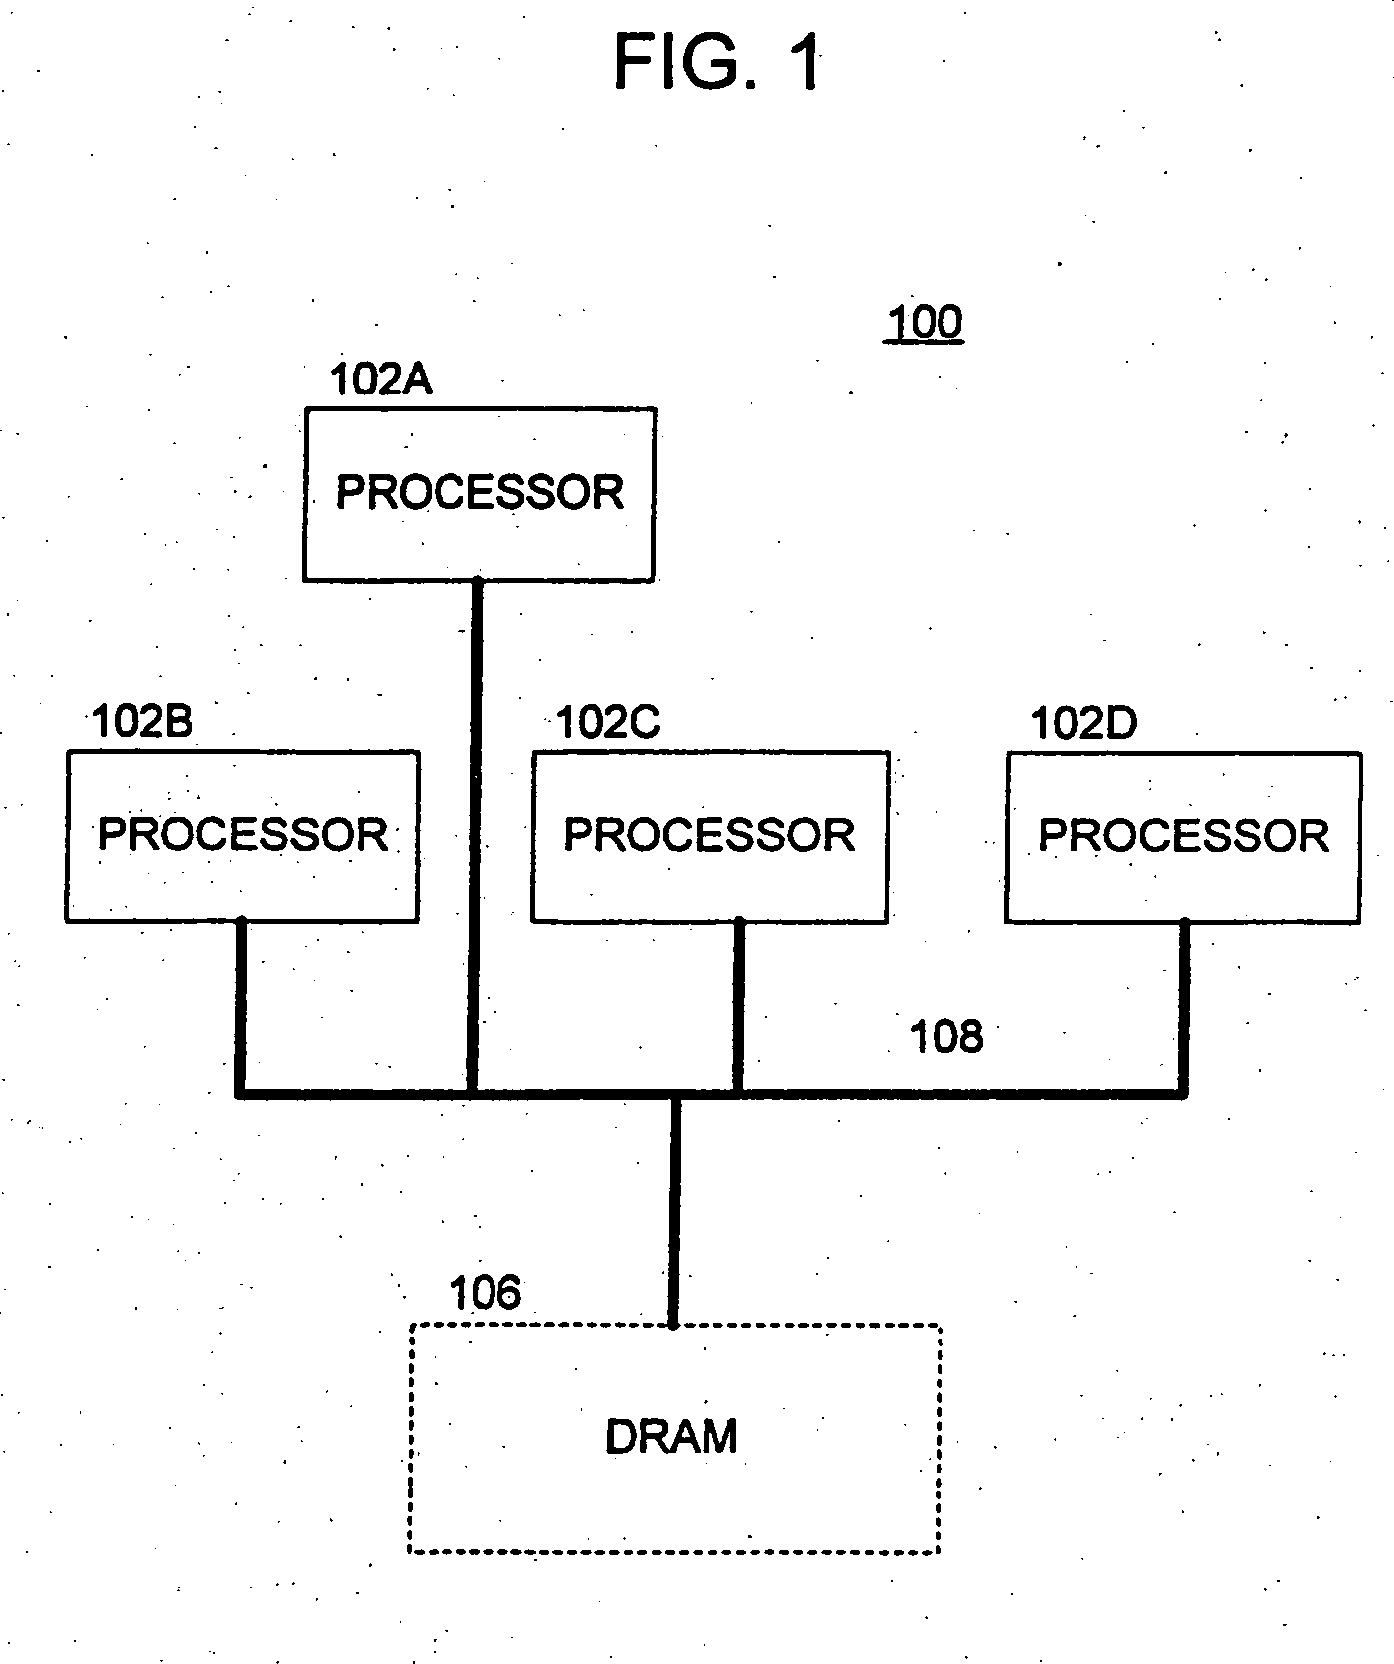 Processor task migration over a network in a multi-processor system